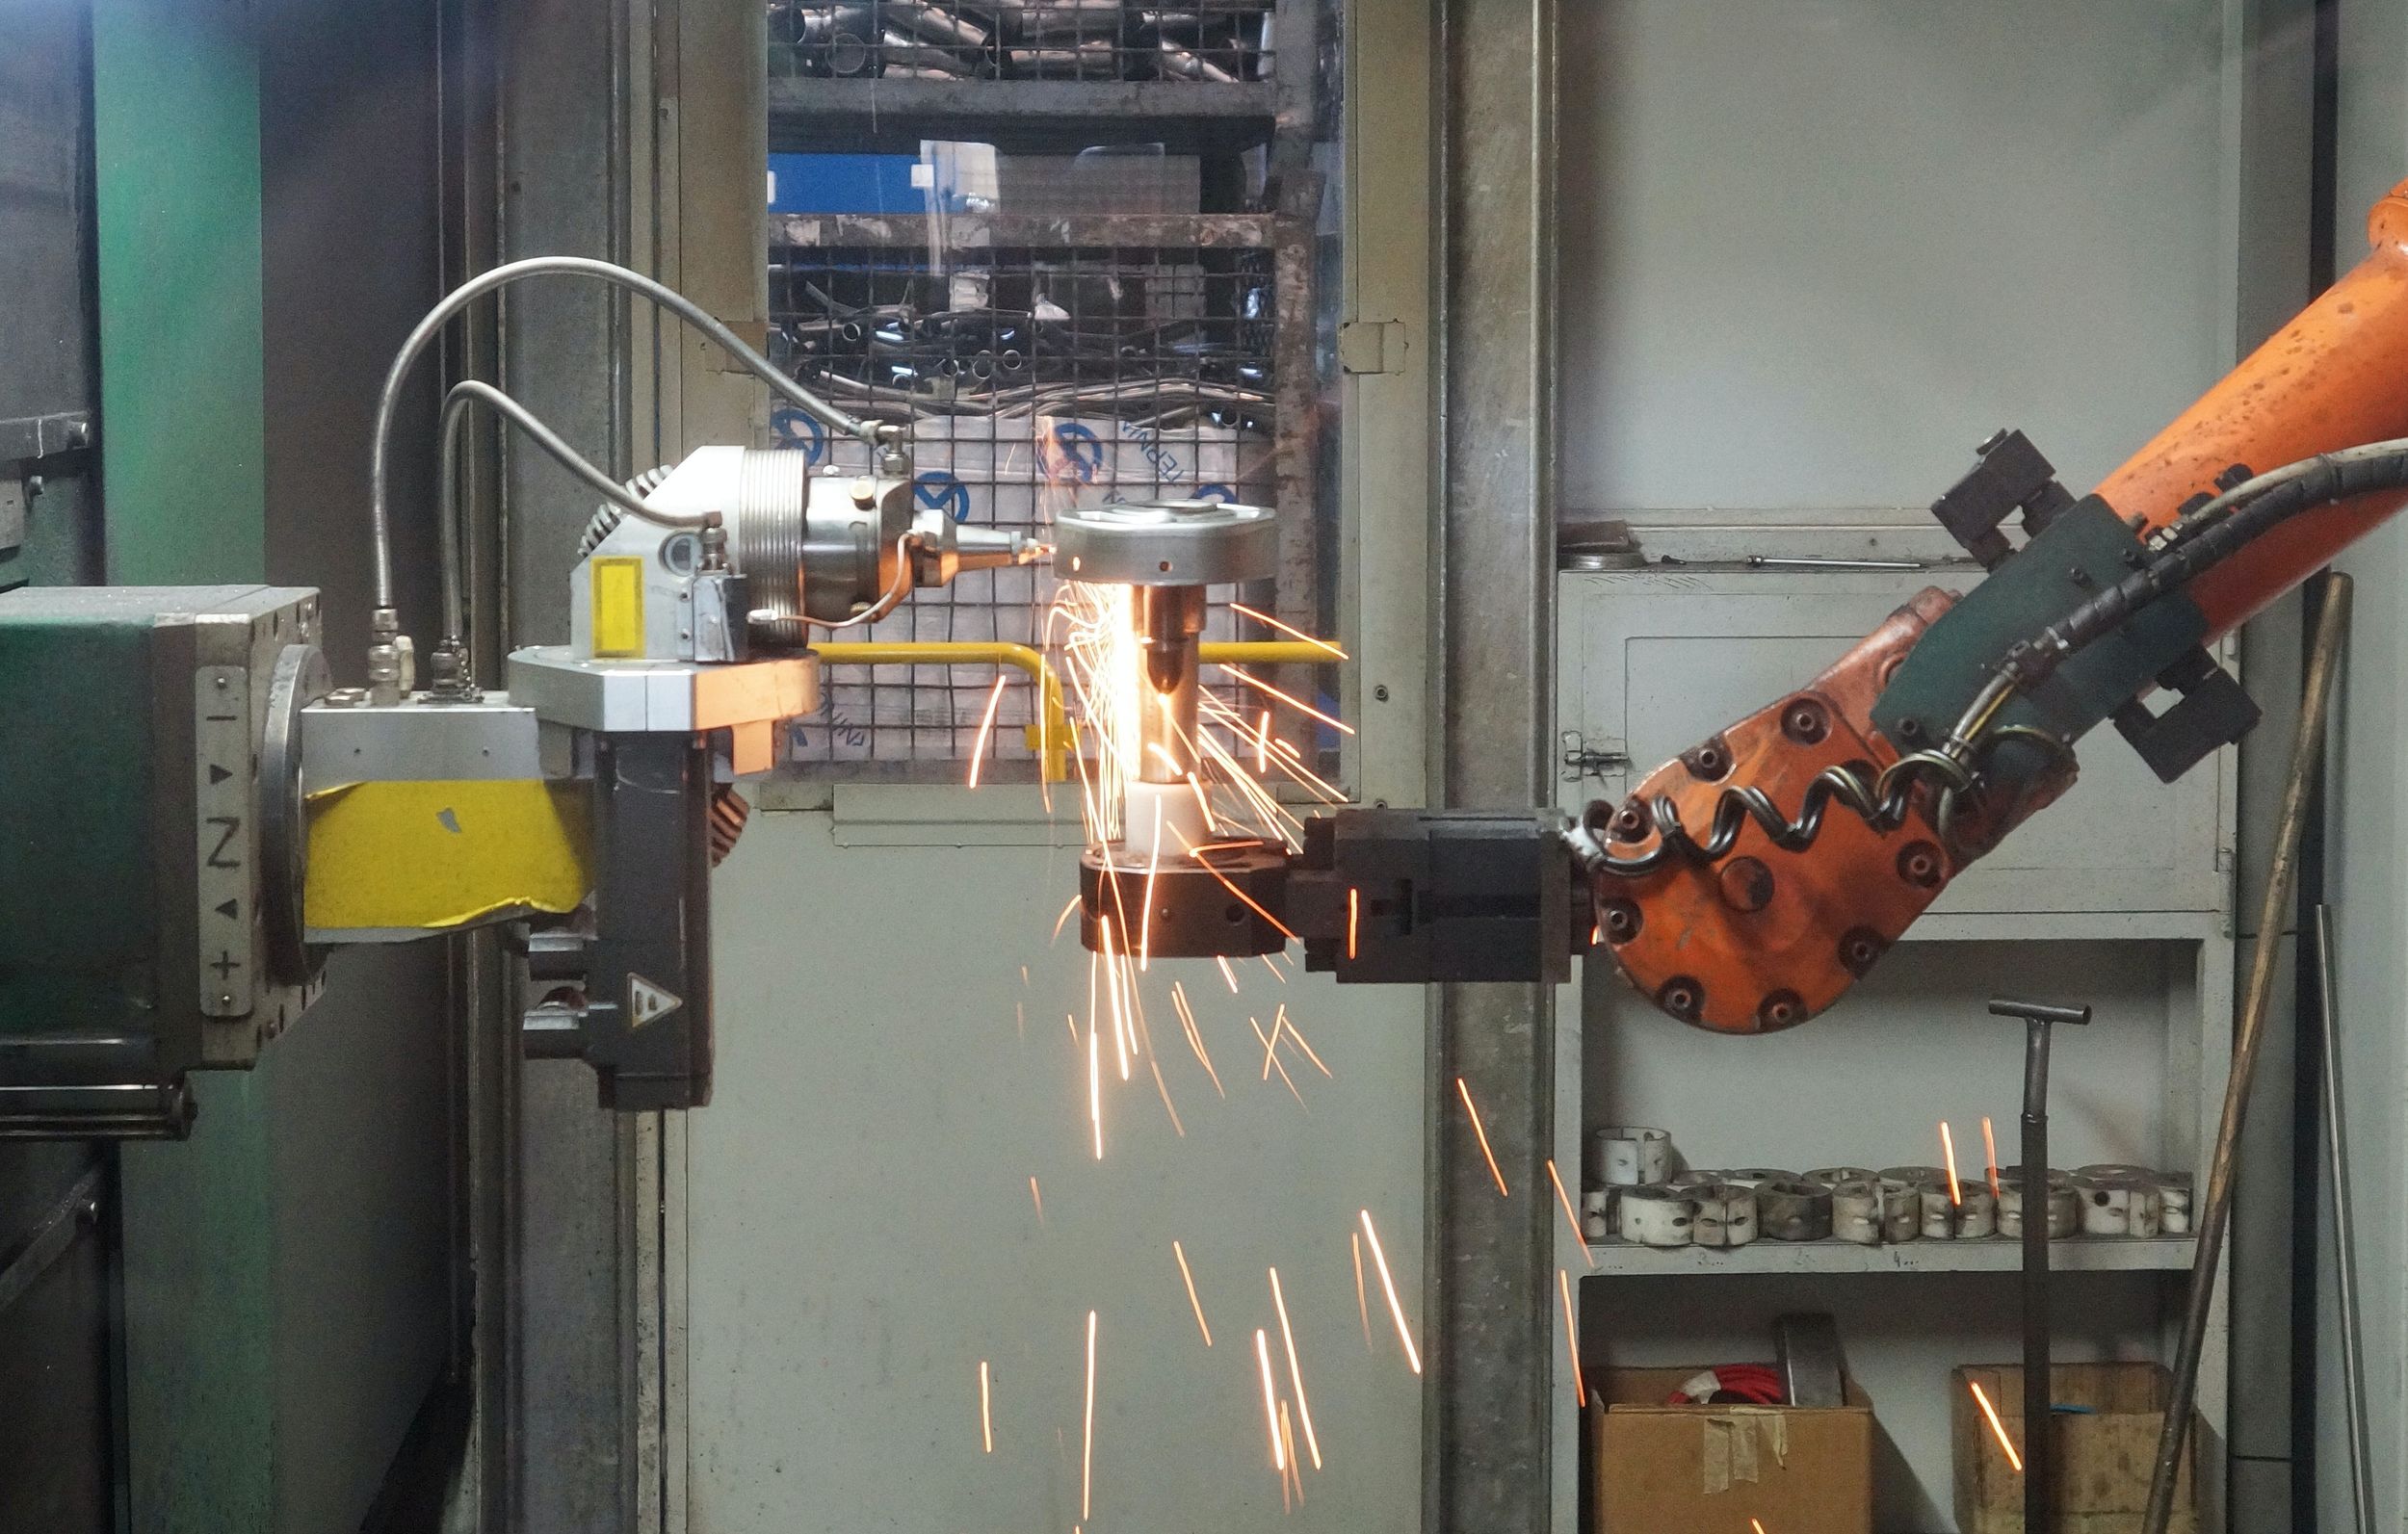 An industrial robot machine grinding steel.